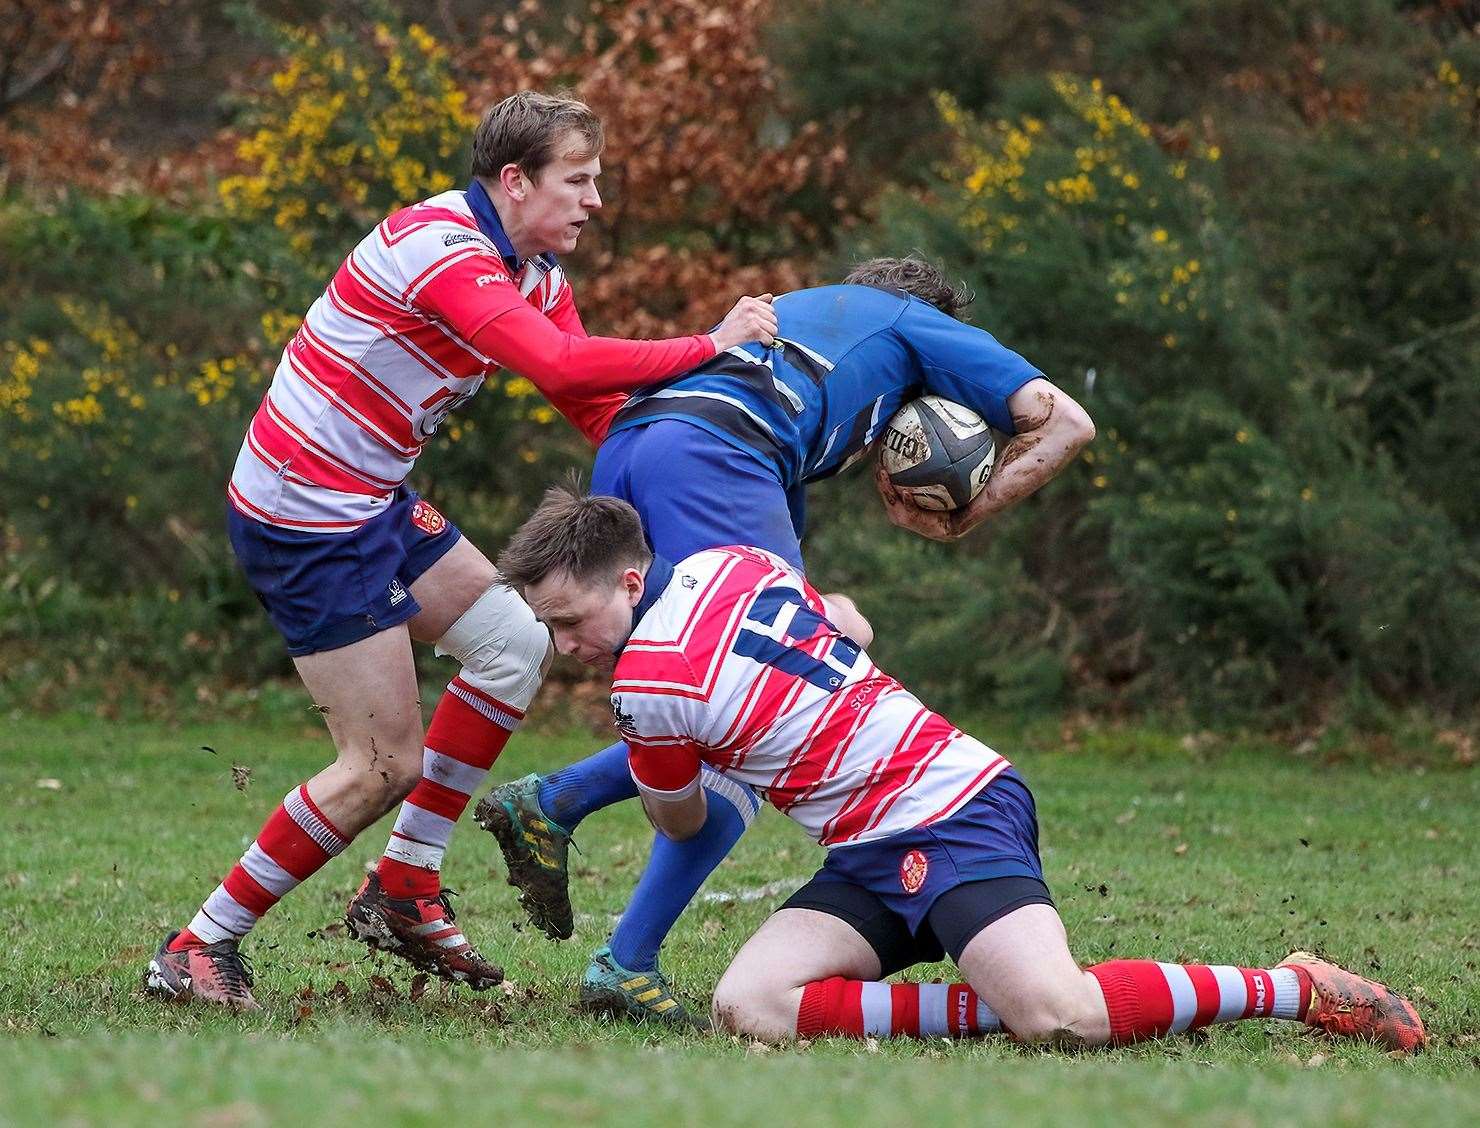 Ben Taylor tackles attacker. Cameron Ireland helping out. Picture: John MacGregor